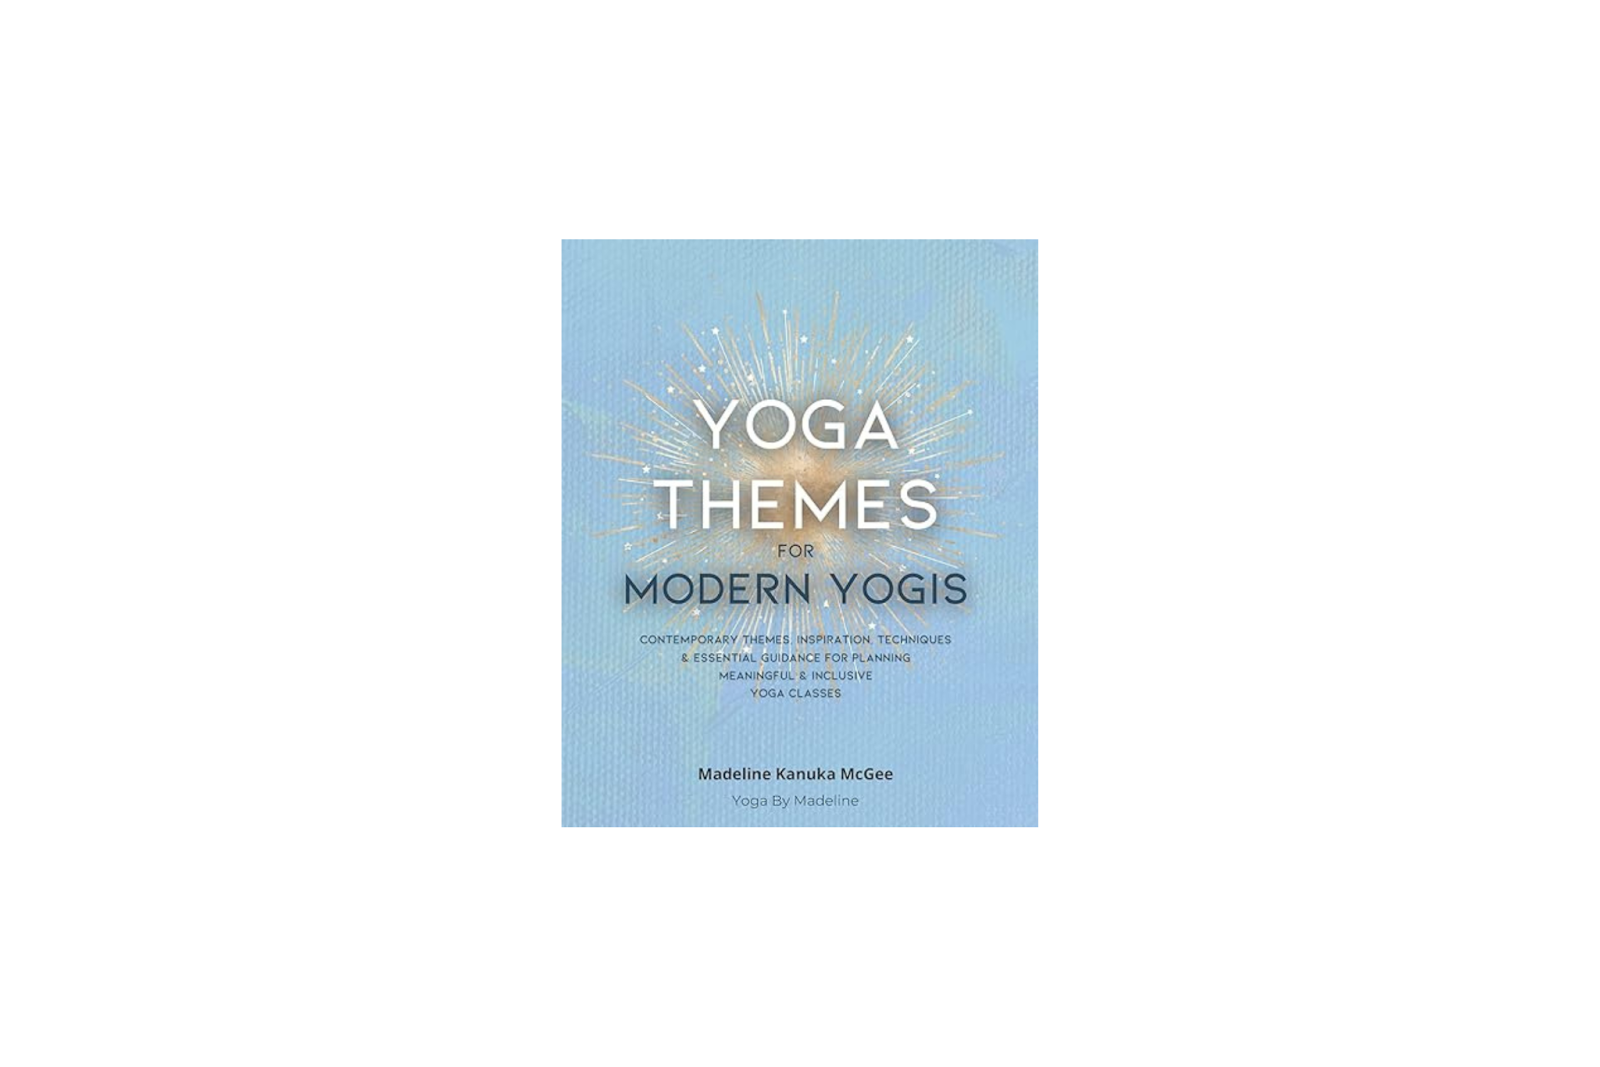  Yoga Themes for Modern Yogis by Madeline Kanuka McGee